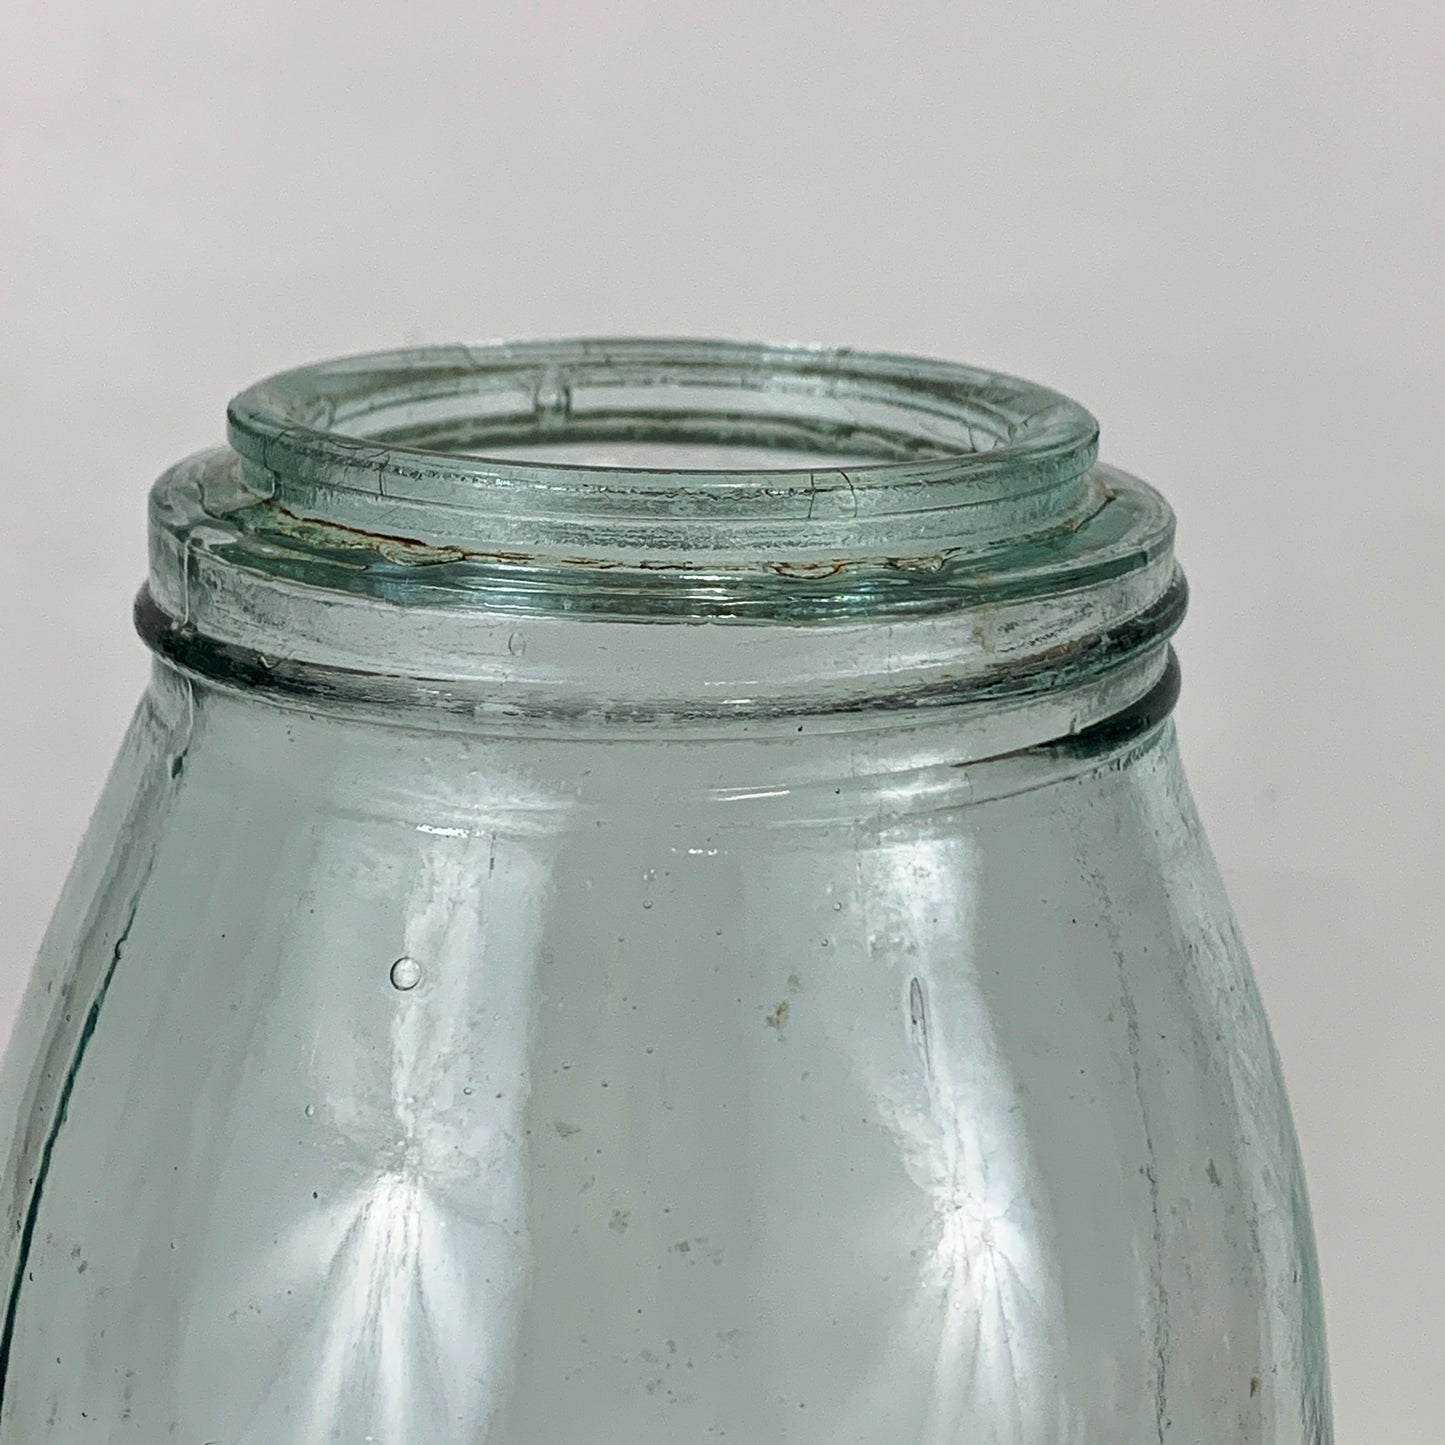 Extra Large Green Tint Crown Canning Jar. Vintage Farm House Kitchen Storage, Antique Canning Jar